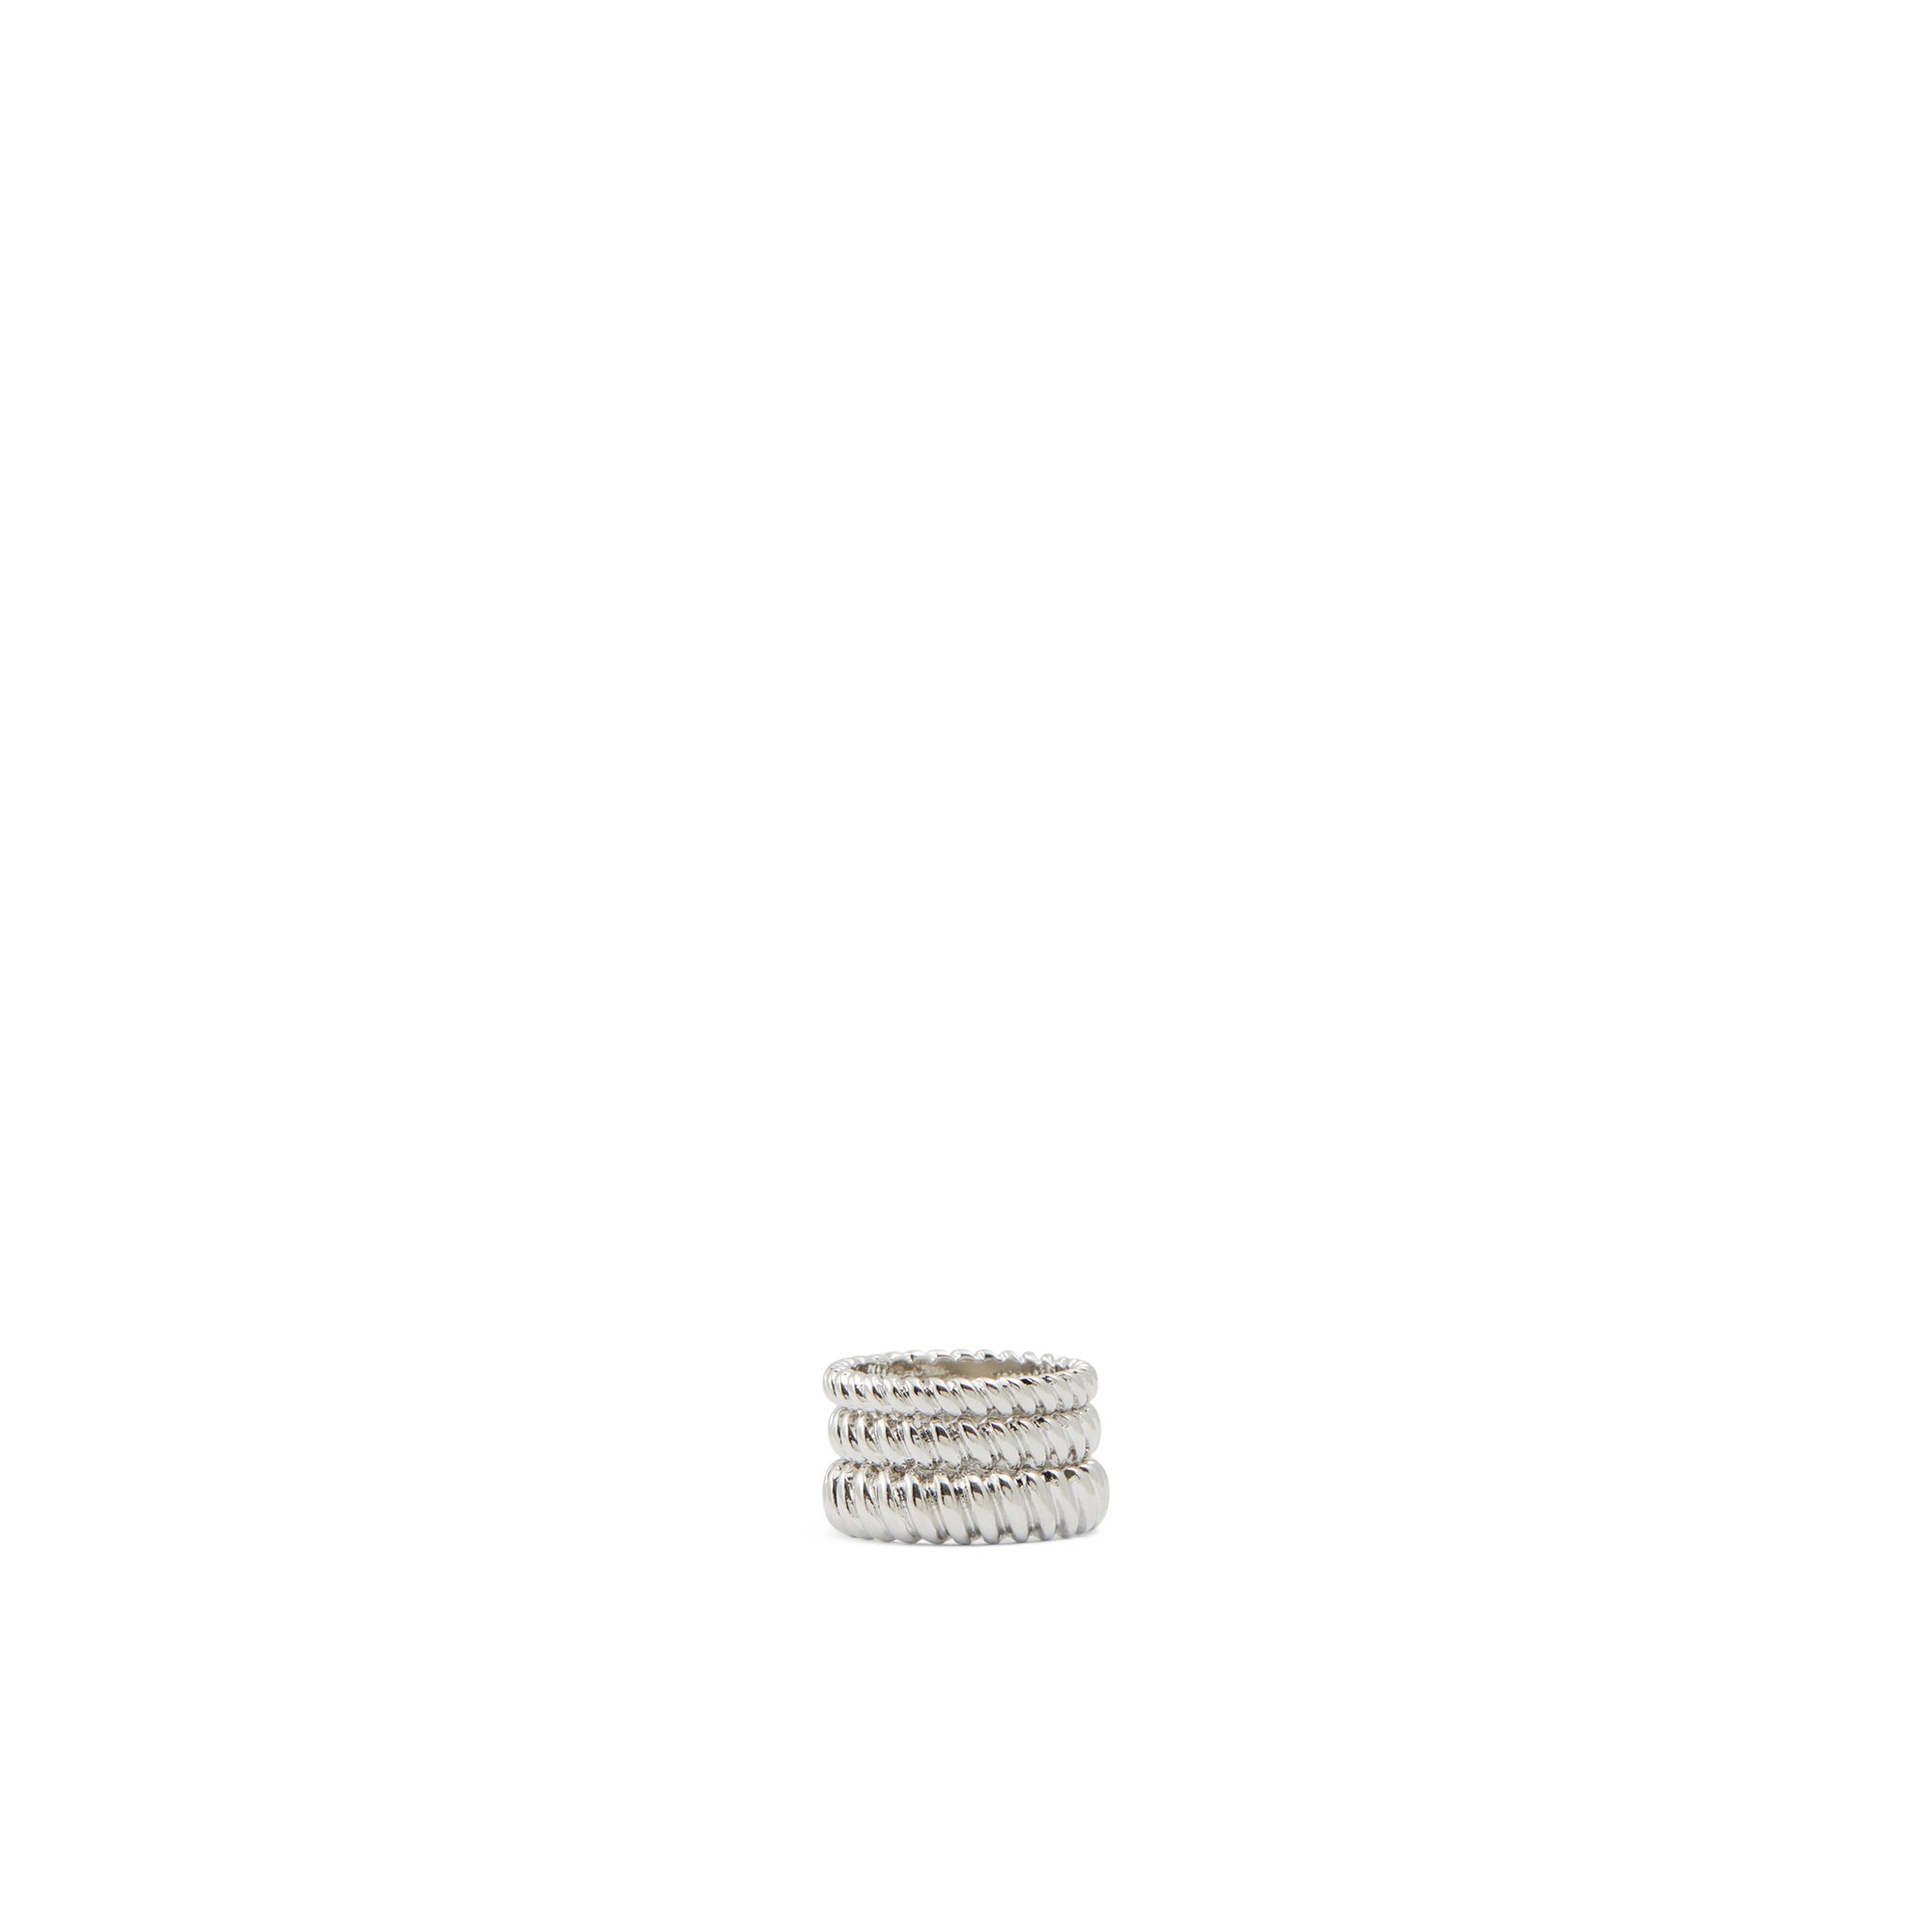 Image of ALDO Acardotlan - Women's Ring Jewelry - Silver, Size 8